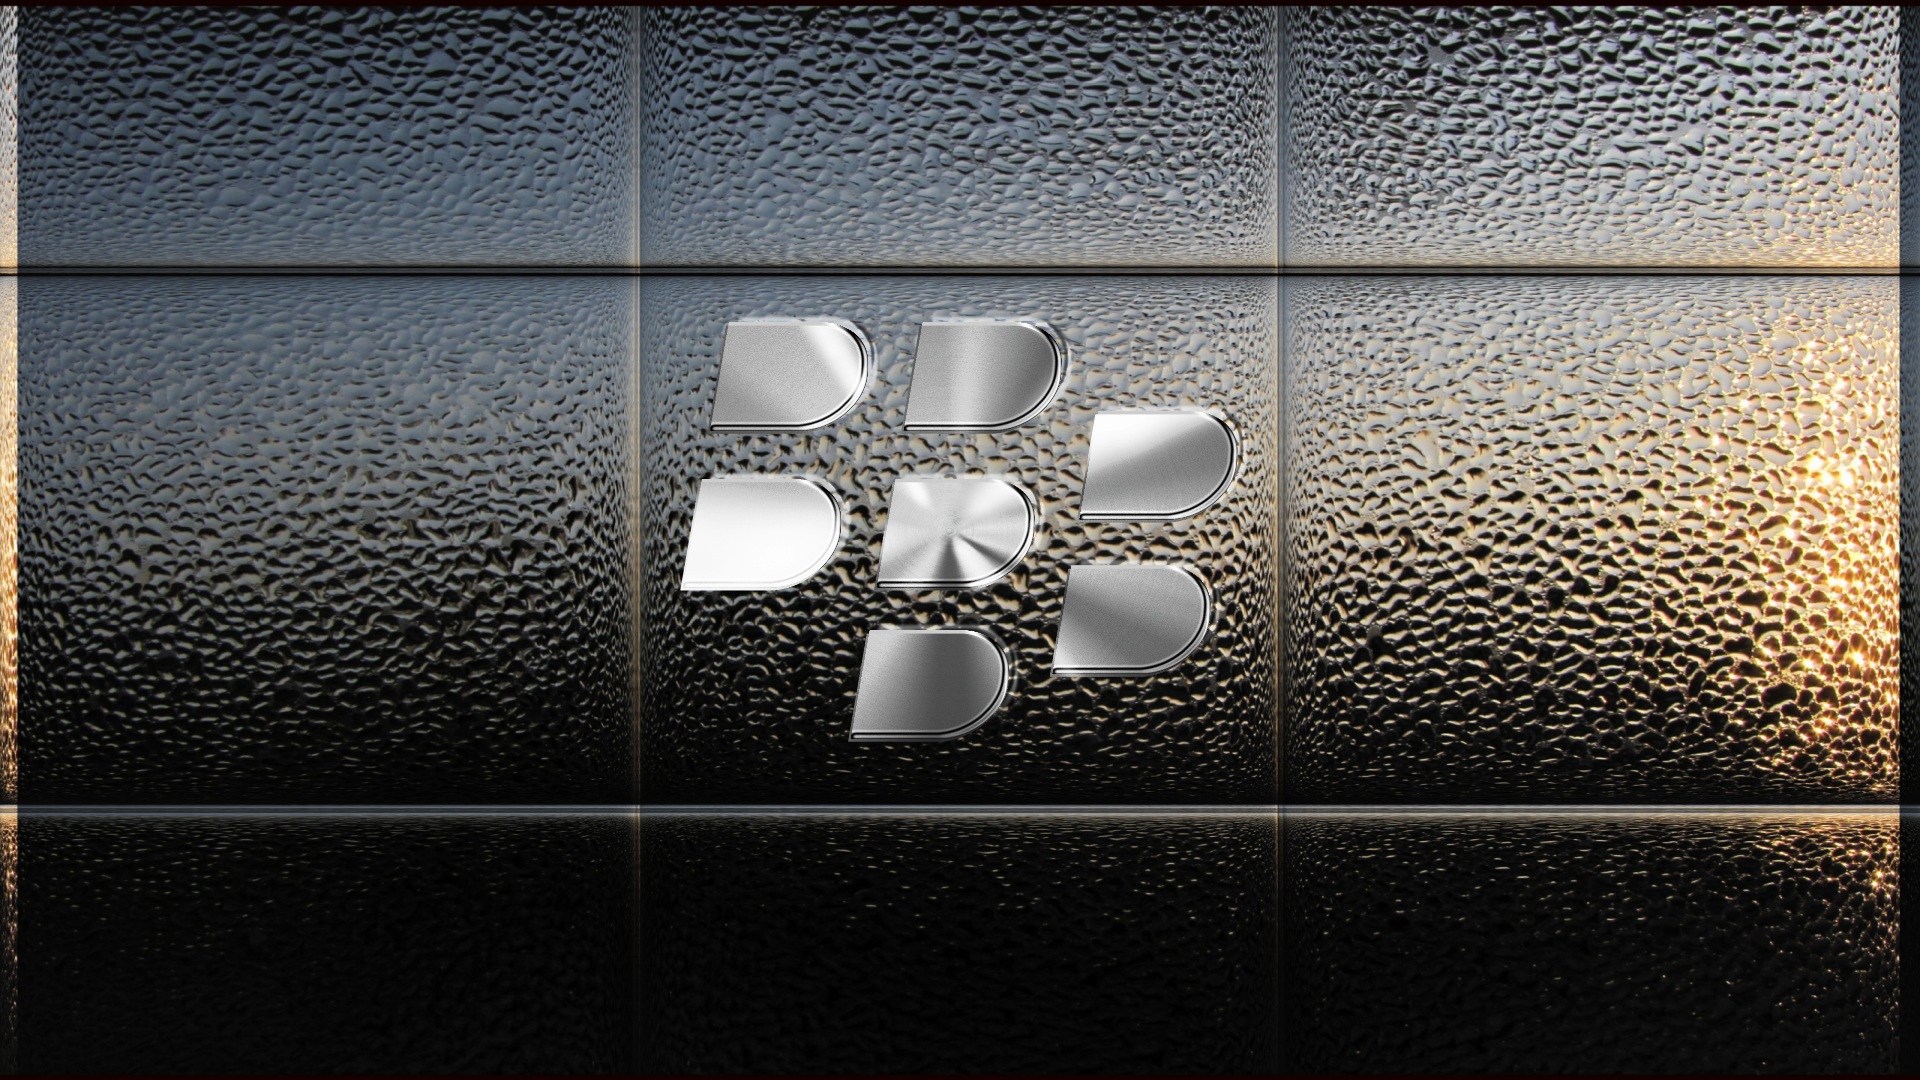 Blackberry Logo Pictures Download Free Desktop Wallpaper Images